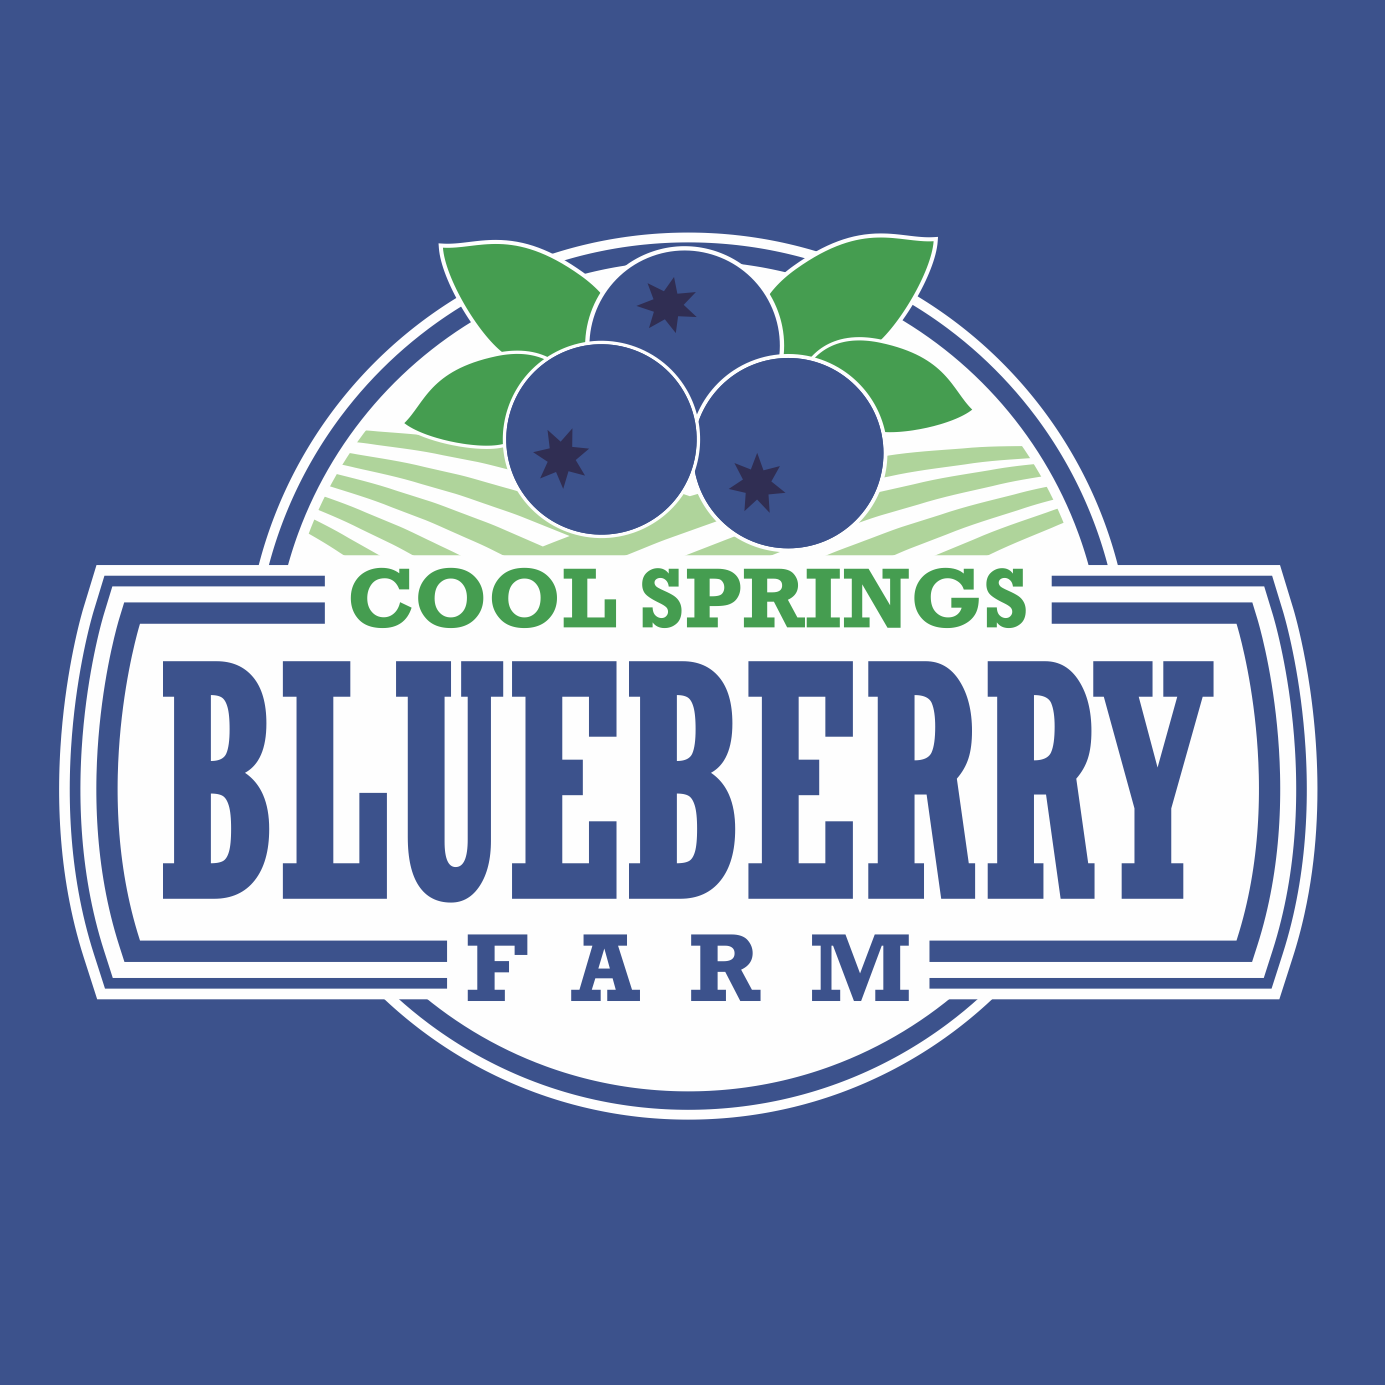 Company logo of Cool Springs Blueberry Farm